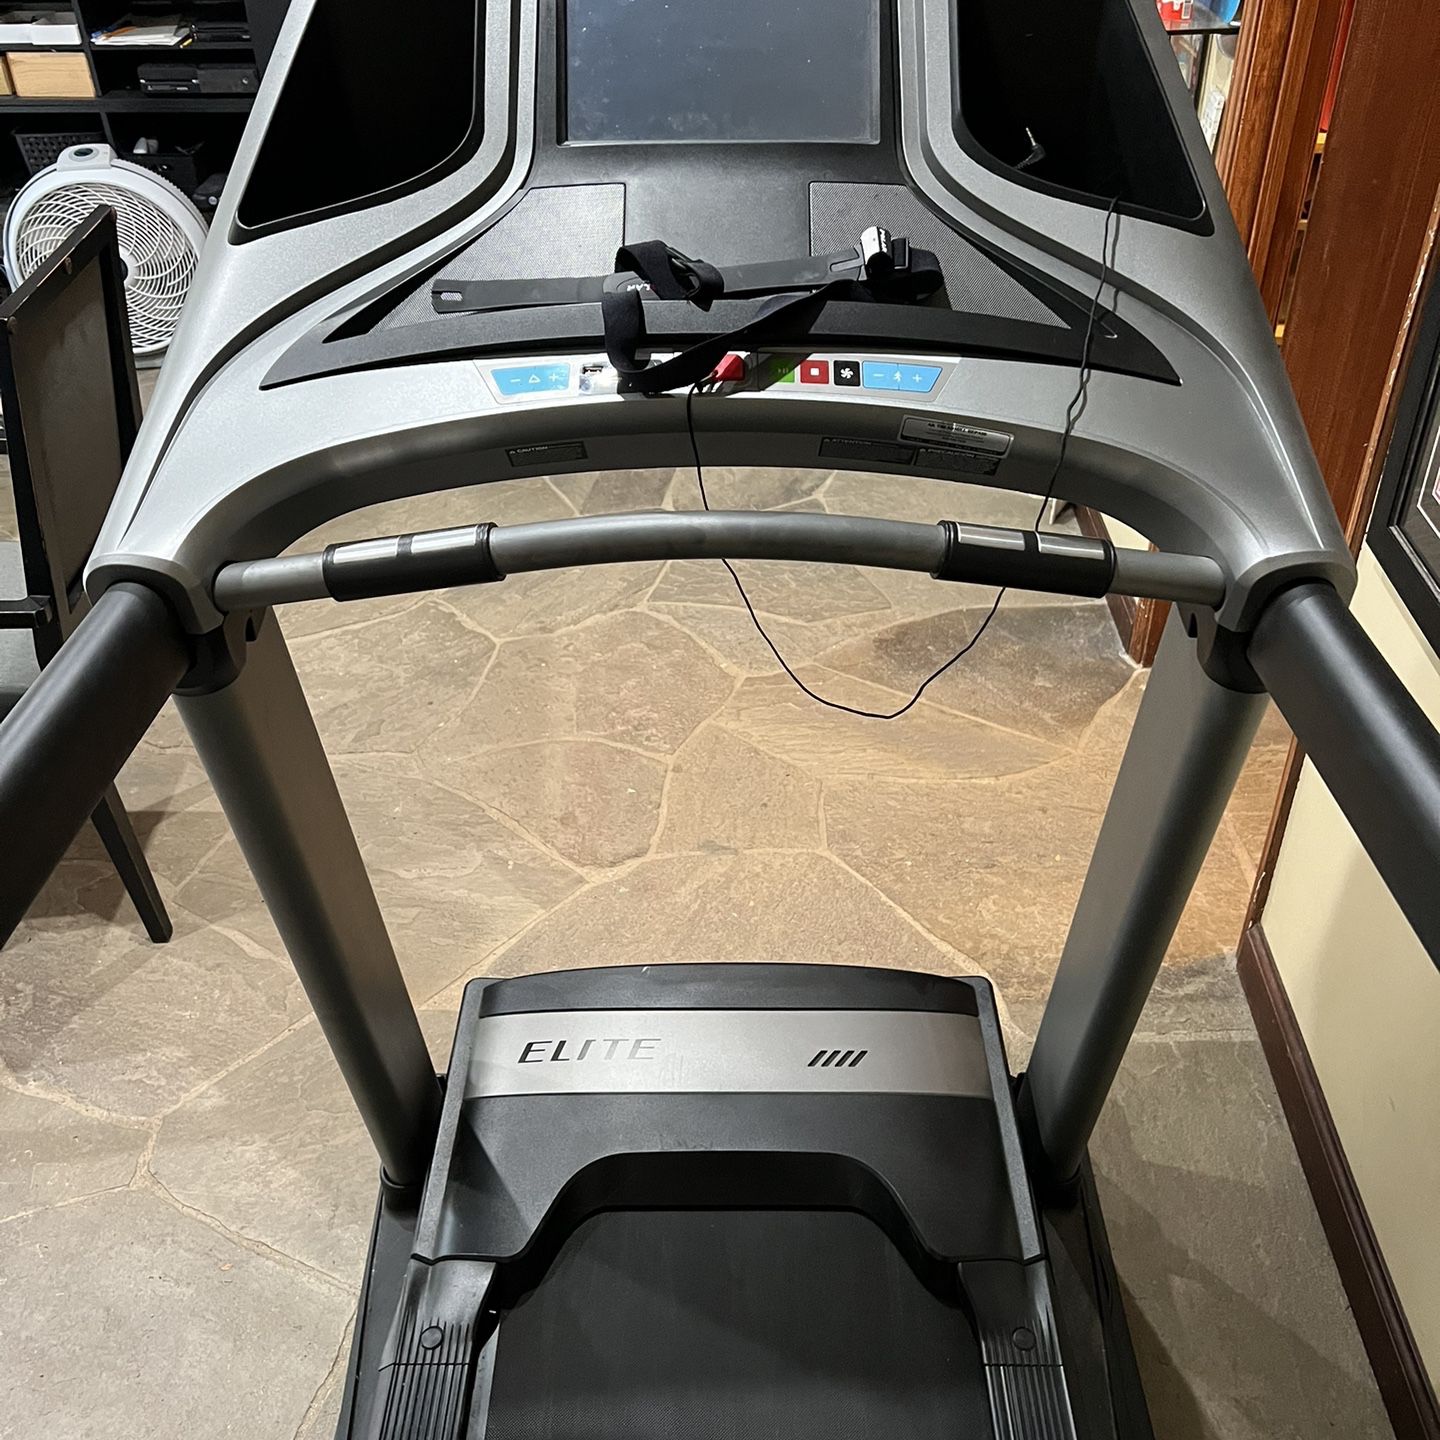 Treadmill-Vision – Horizon T9 Elite